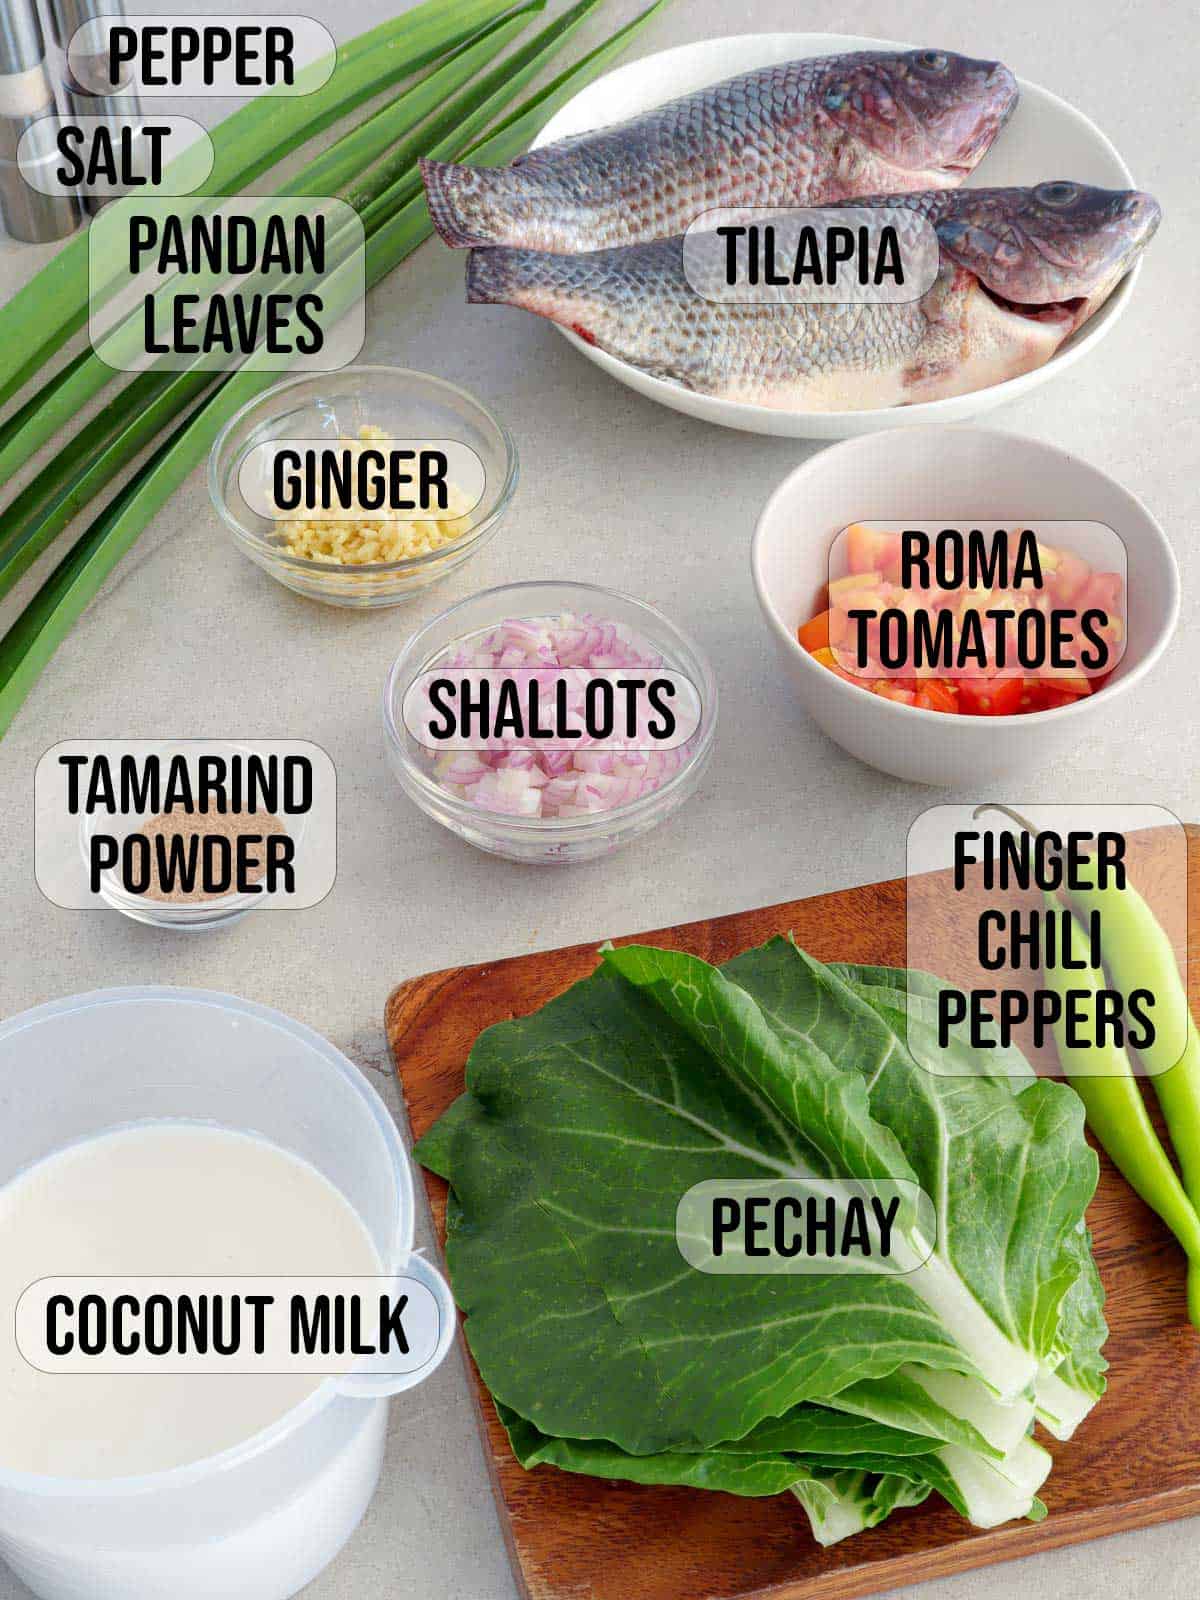 tilapia, pechay leaves, pandan leaf, tomatoes, shallots, tamarind powder, coconut milk, tomatoes, ginger, salt, pepper in bowls.